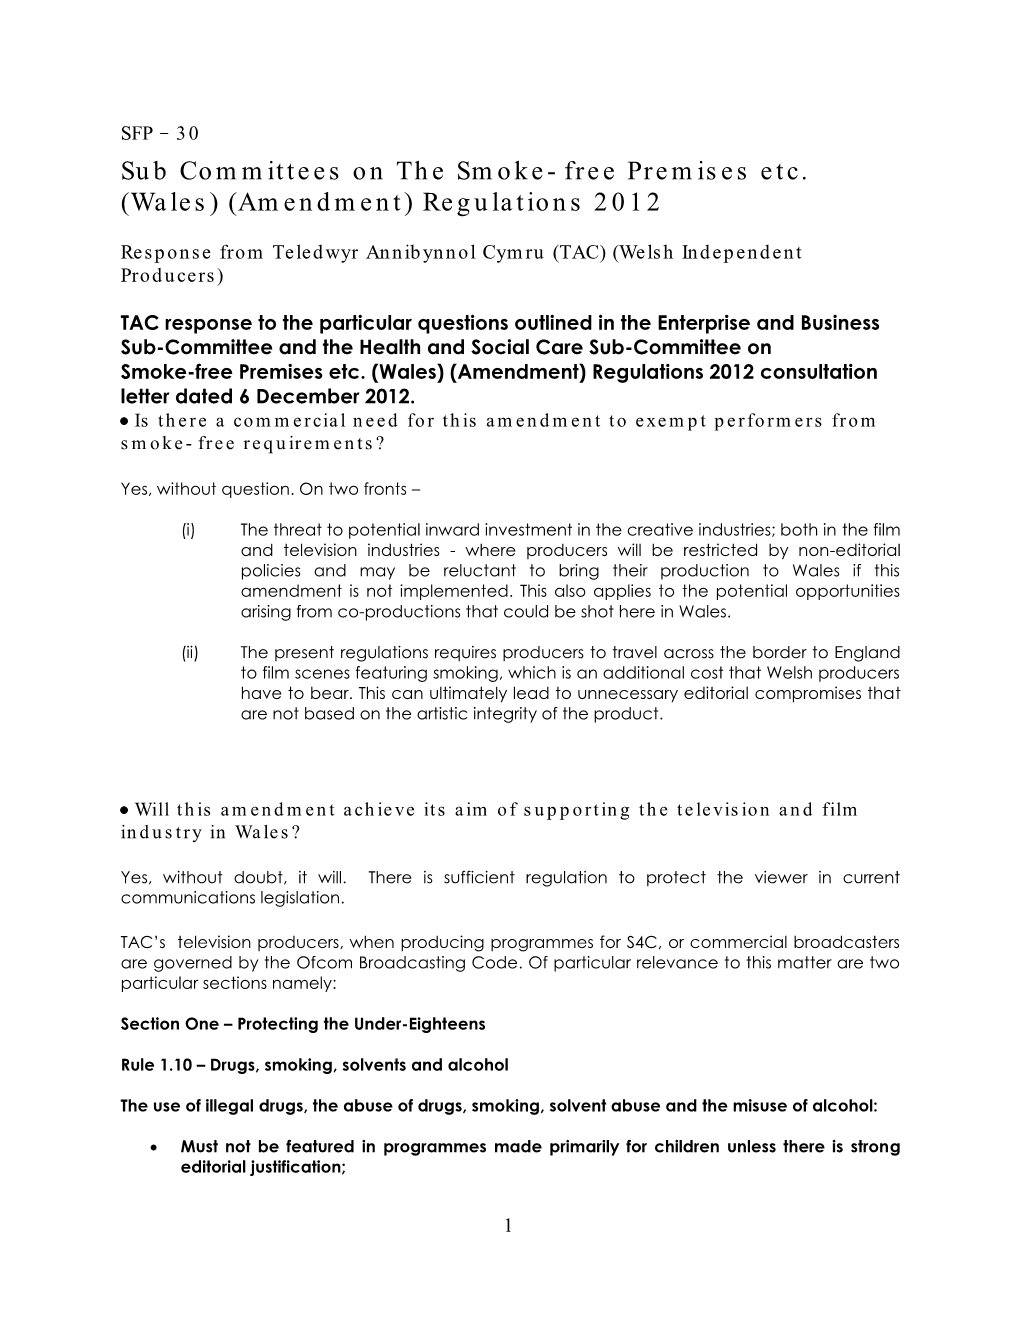 Sub Committees on the Smoke-Free Premises Etc. (Wales) (Amendment) Regulations 2012